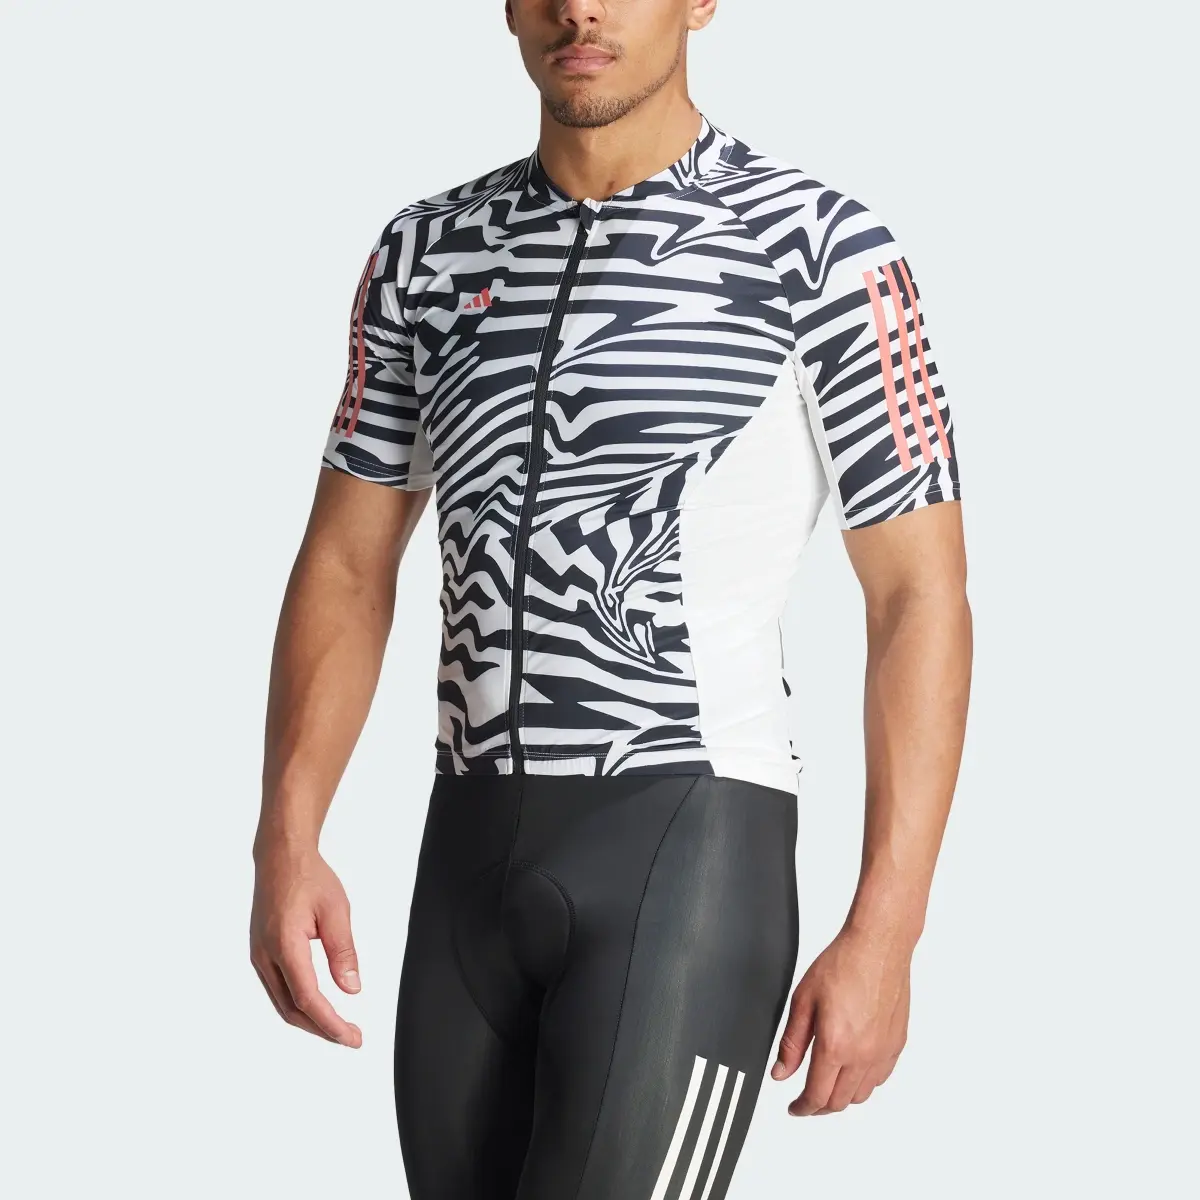 Adidas Essentials 3-Stripes Fast Zebra Cycling Jersey. 1